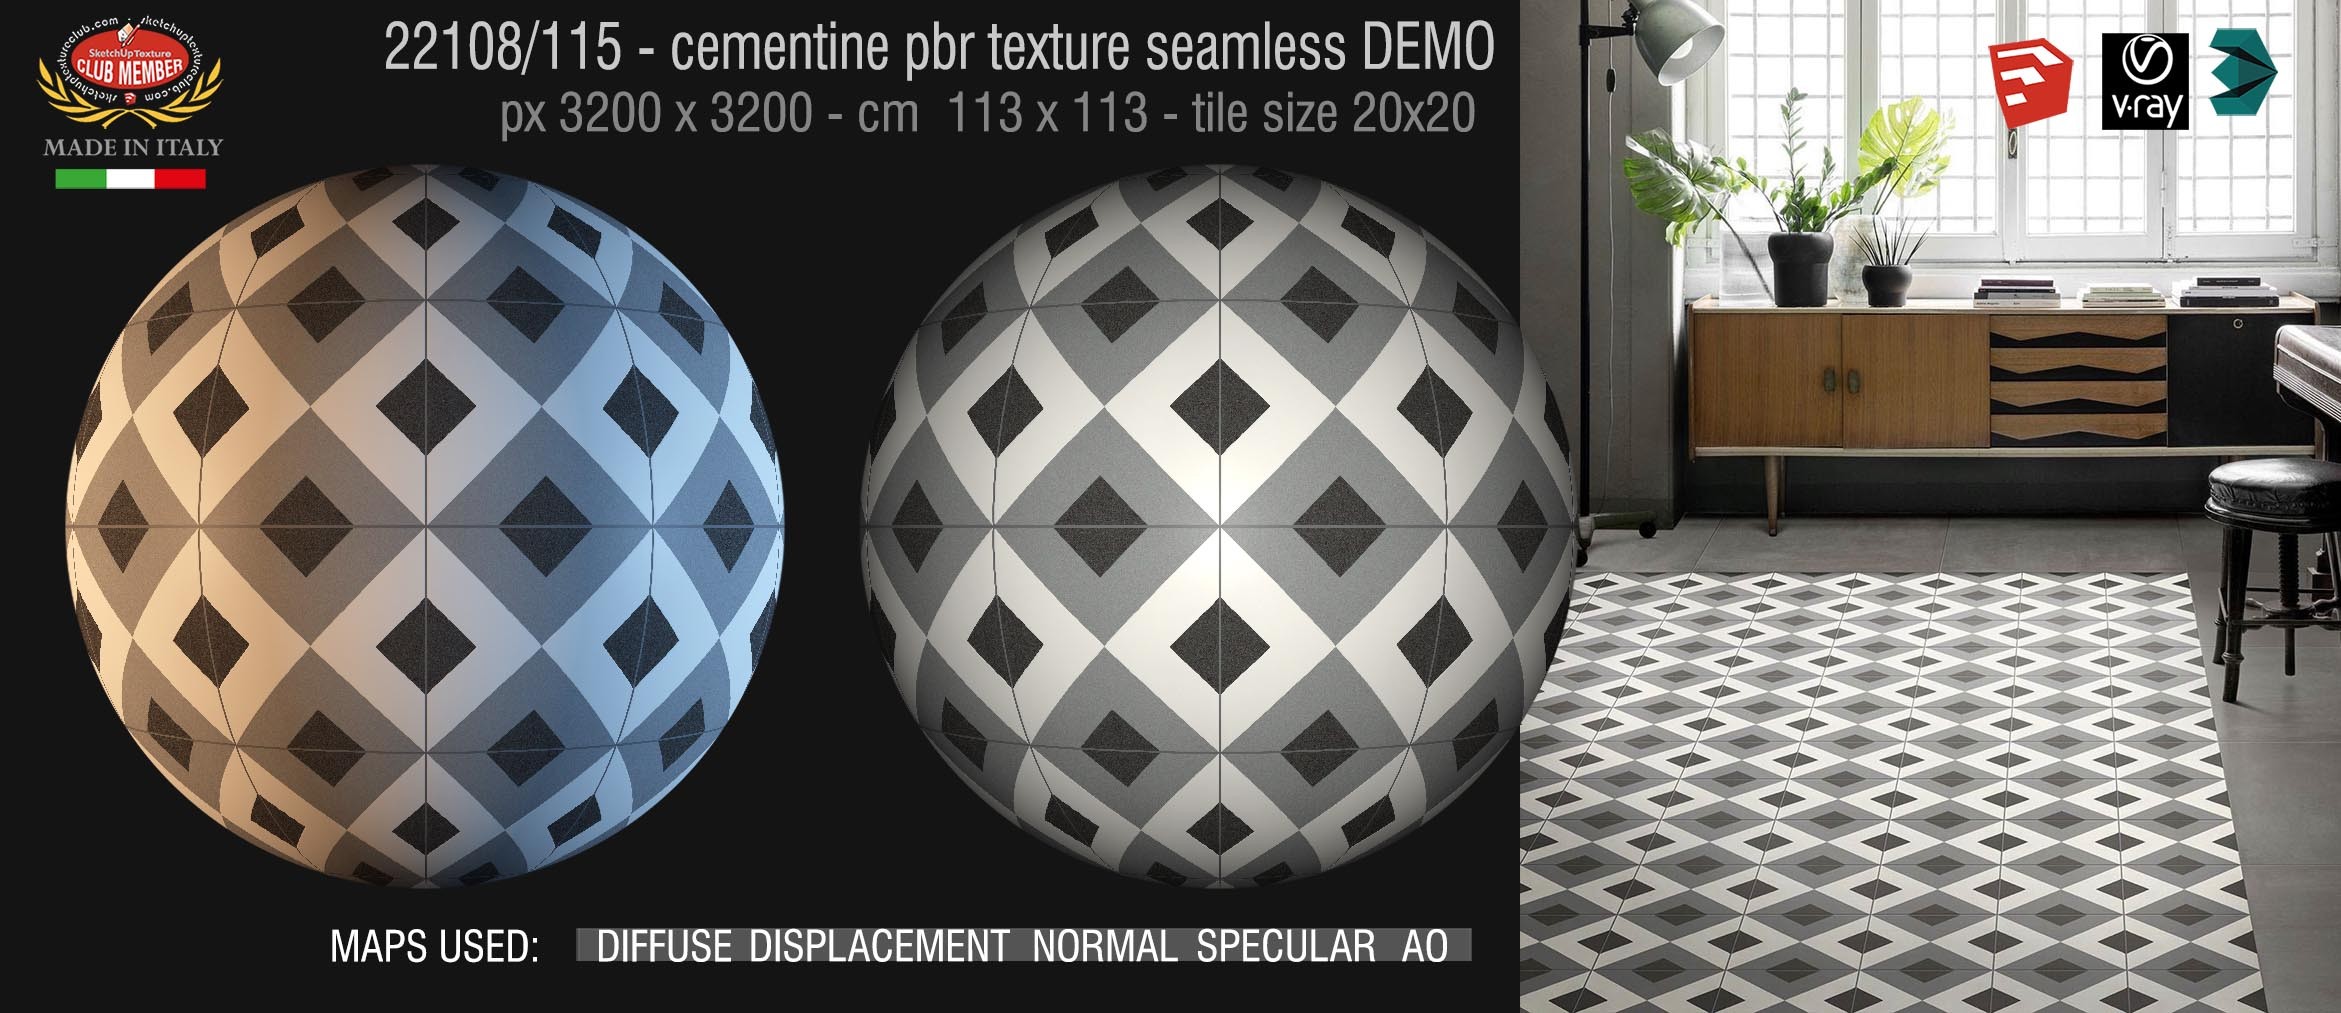 22108/115 cementine tiles Pbr texture seamless demo - D_Segni Concrete Look by Marazzi